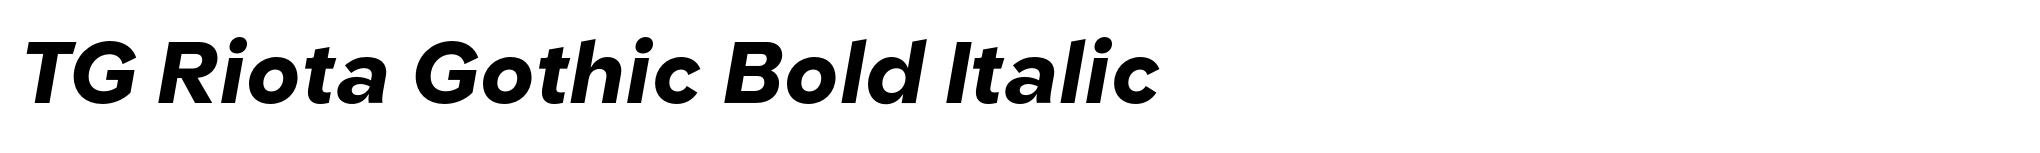 TG Riota Gothic Bold Italic image